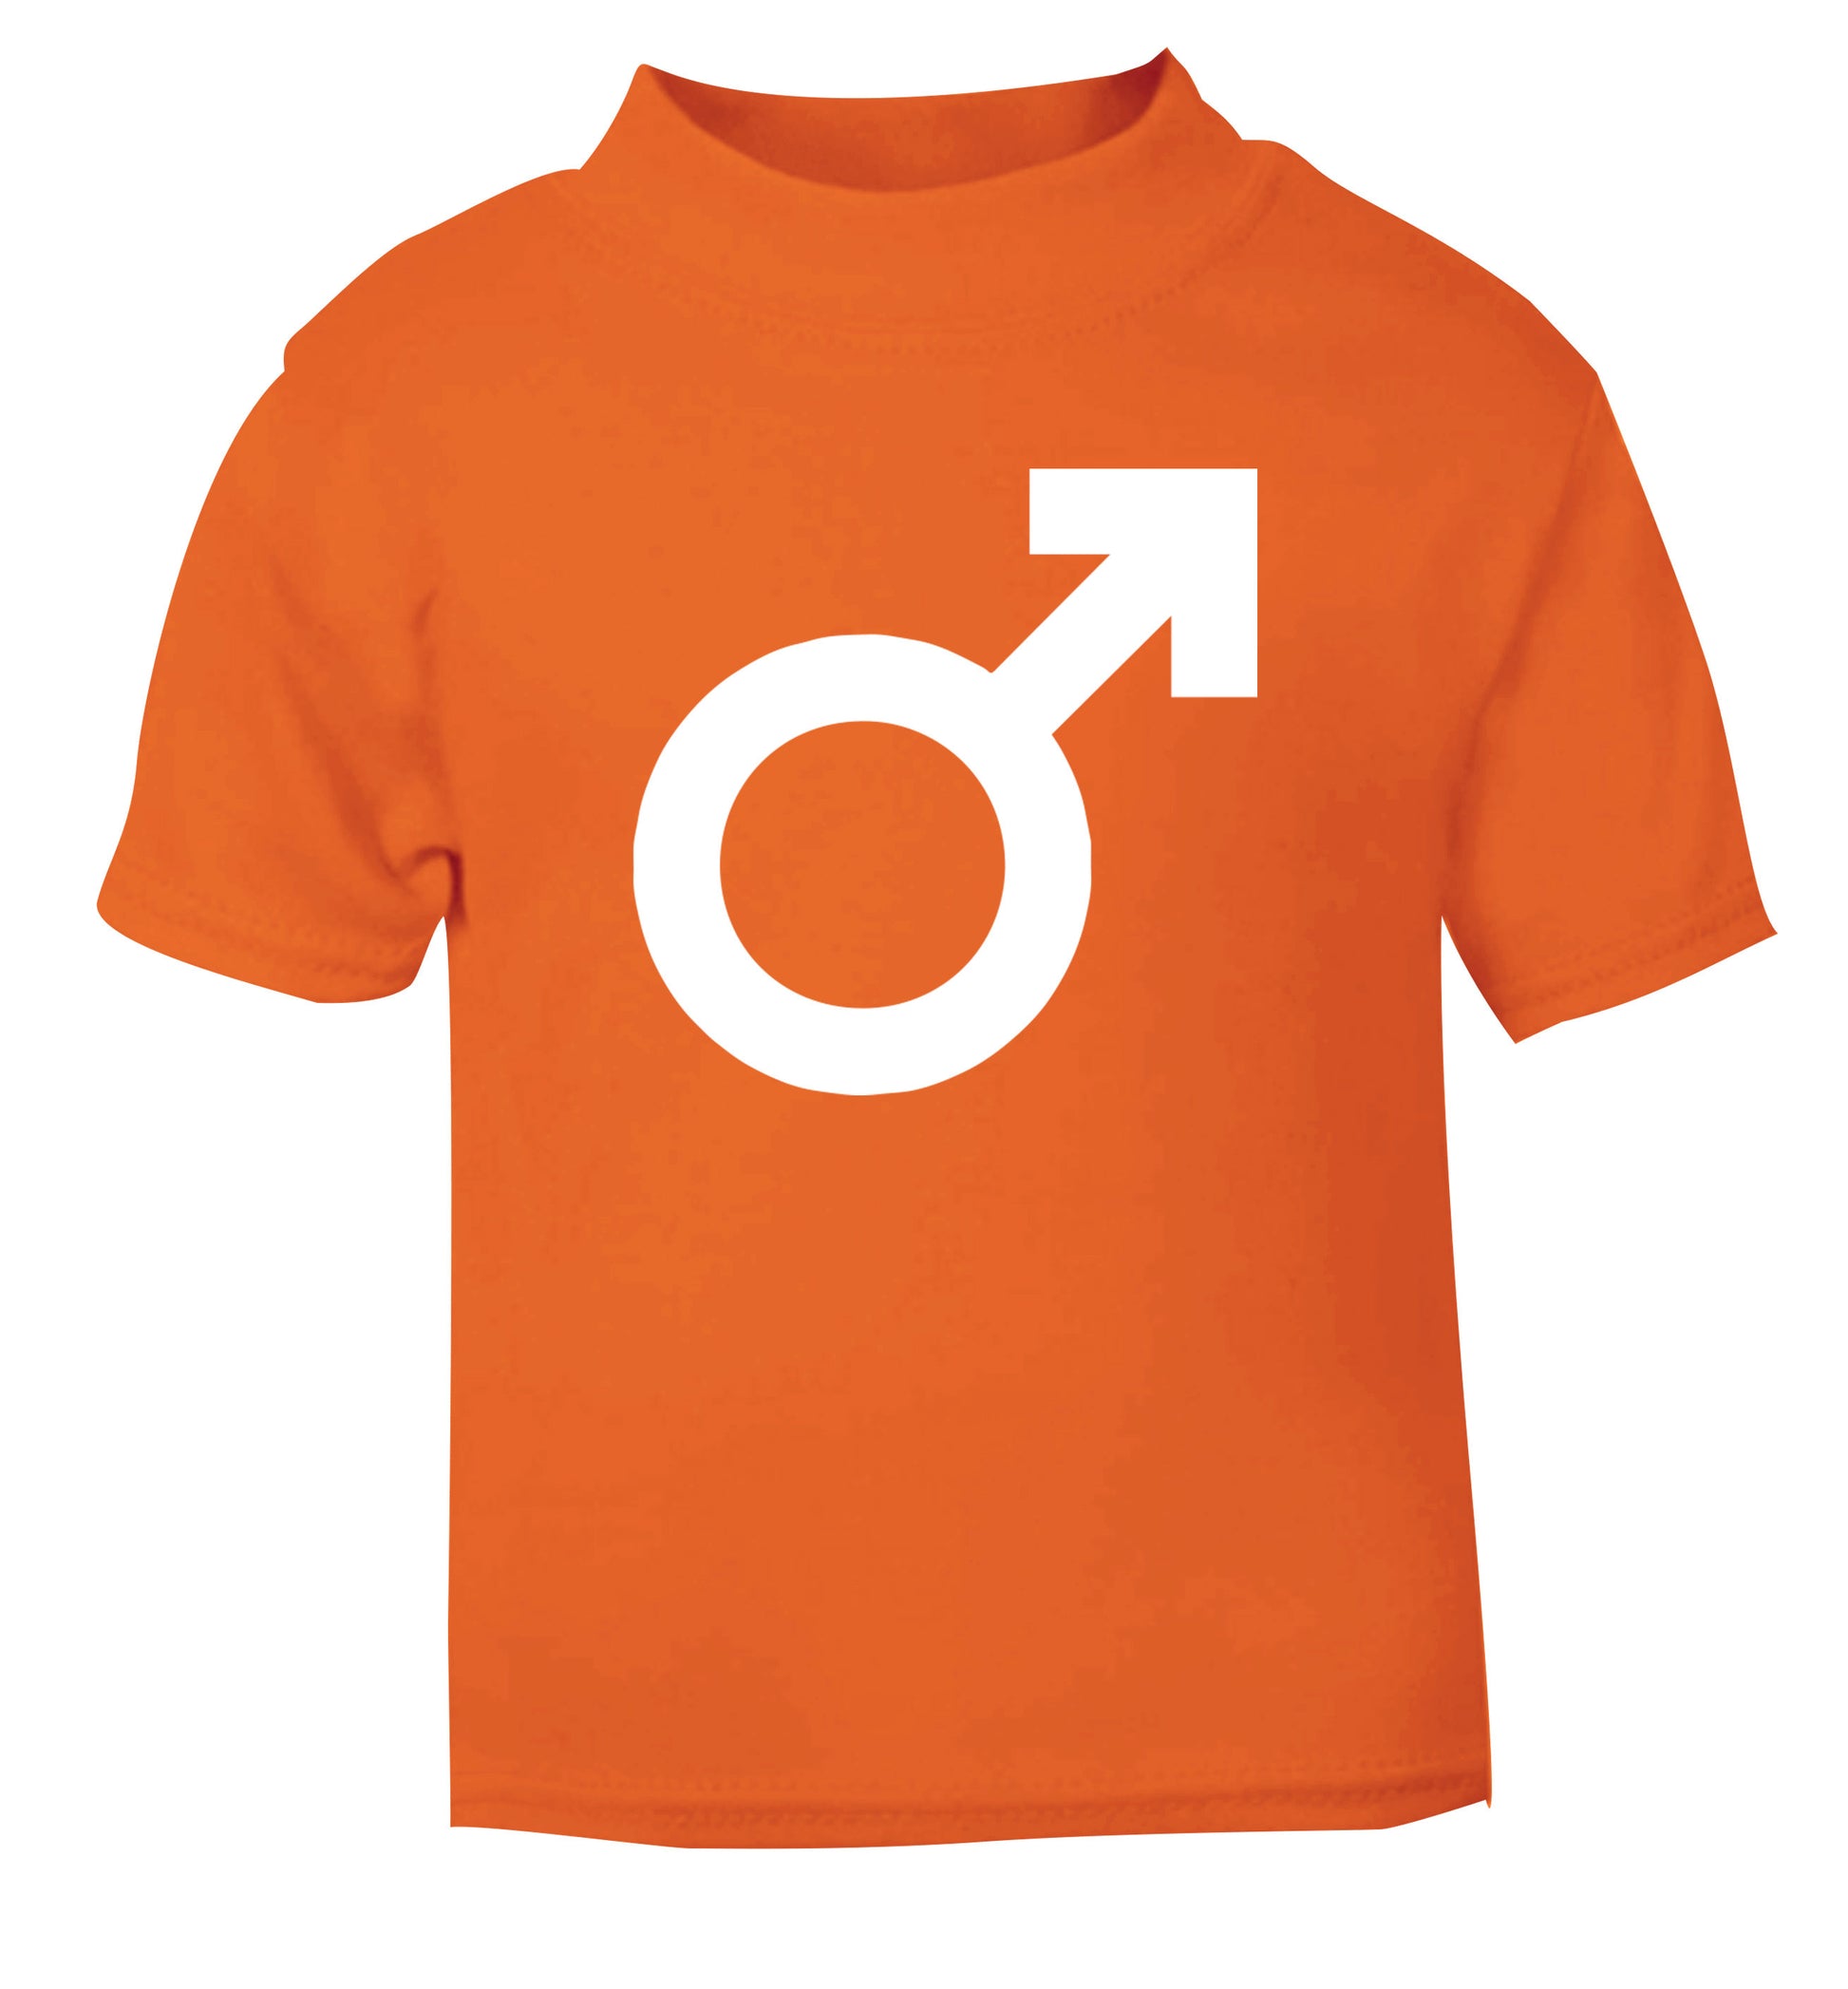 Male symbol large orange Baby Toddler Tshirt 2 Years